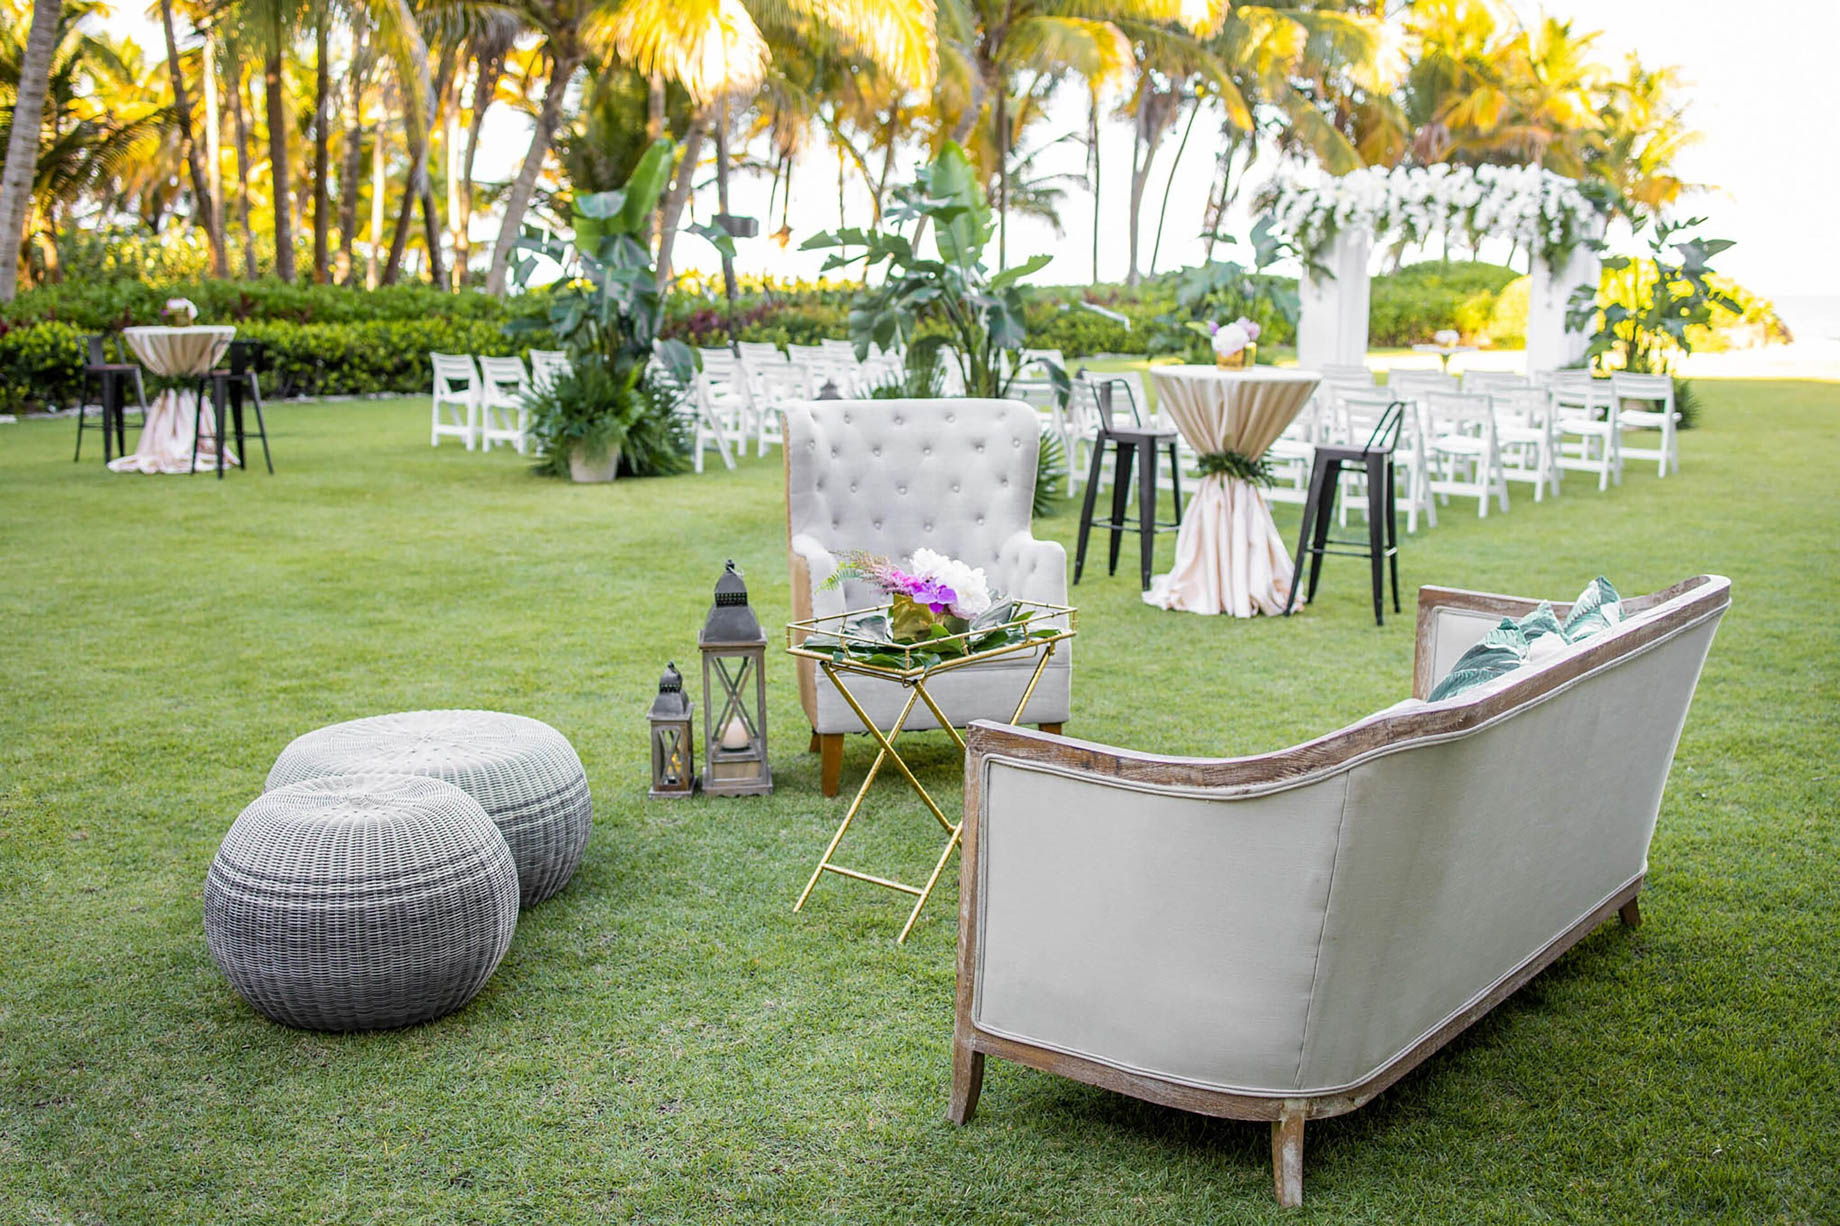 The St. Regis Bahia Beach Resort – Rio Grande, Puerto Rico – Exterior Lawn Wedding Bespoken Setup